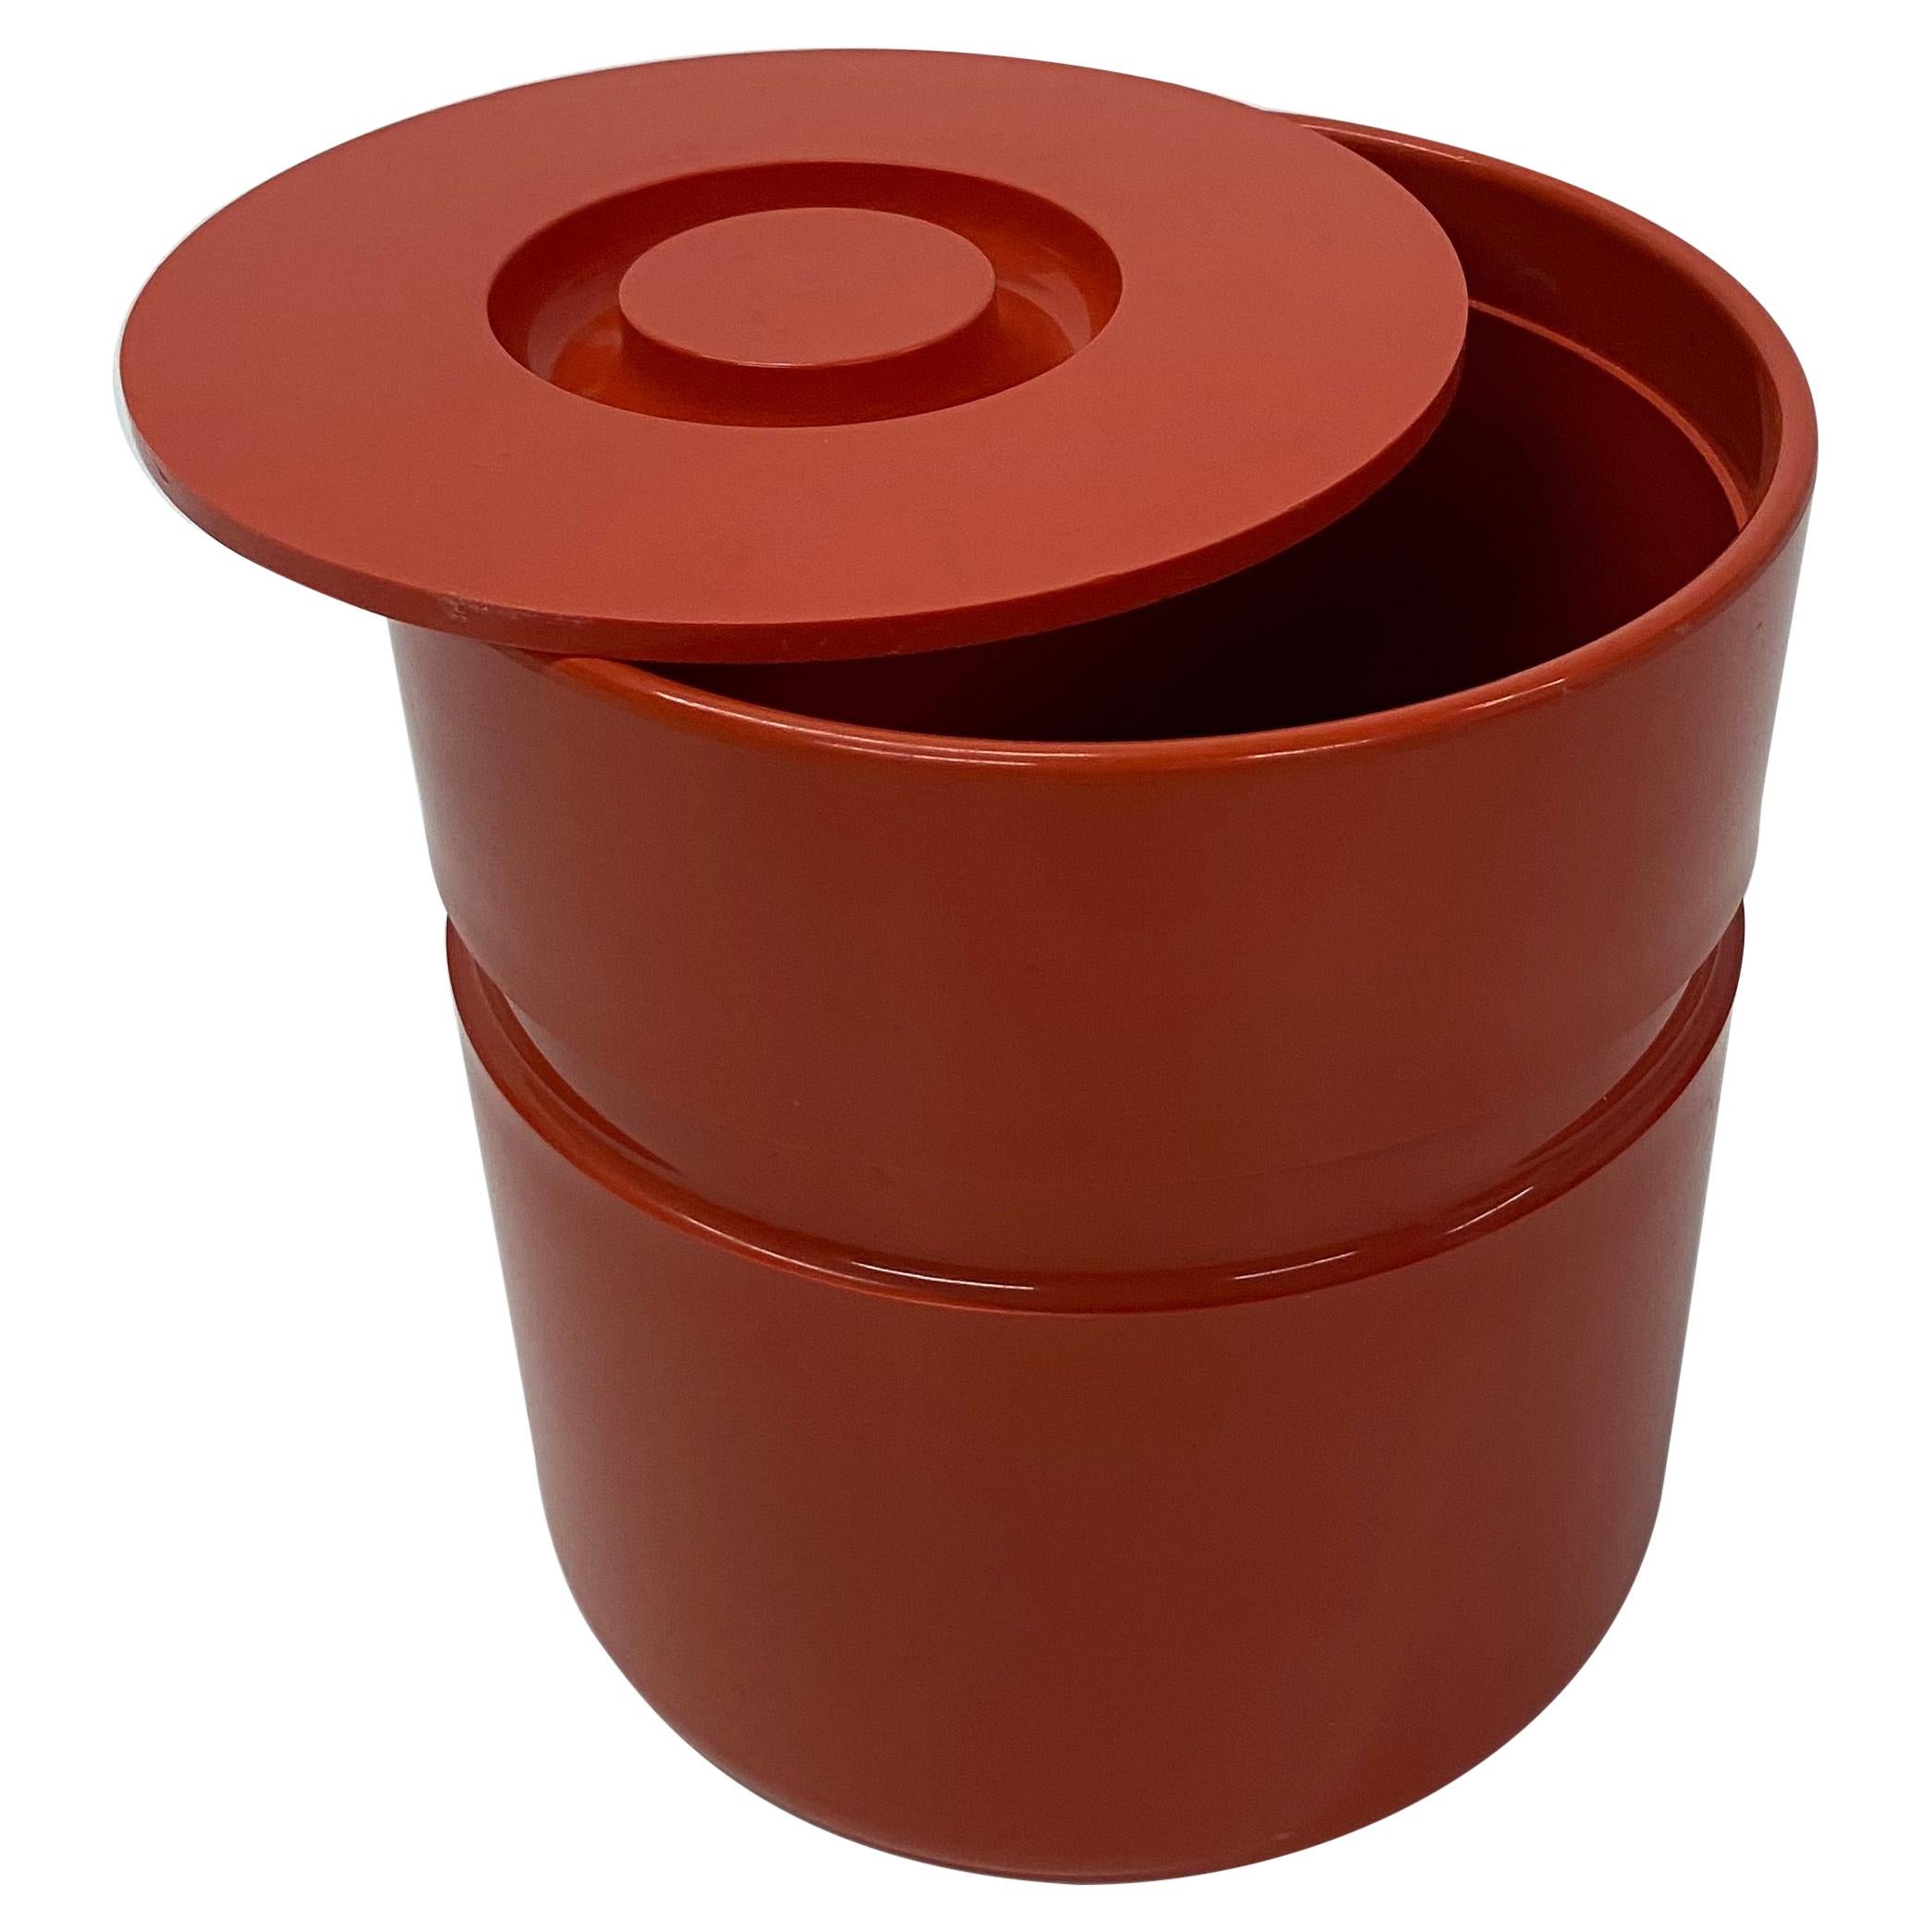 Sergio Asti Designed Red Ice Bucket for Heller, 1970s